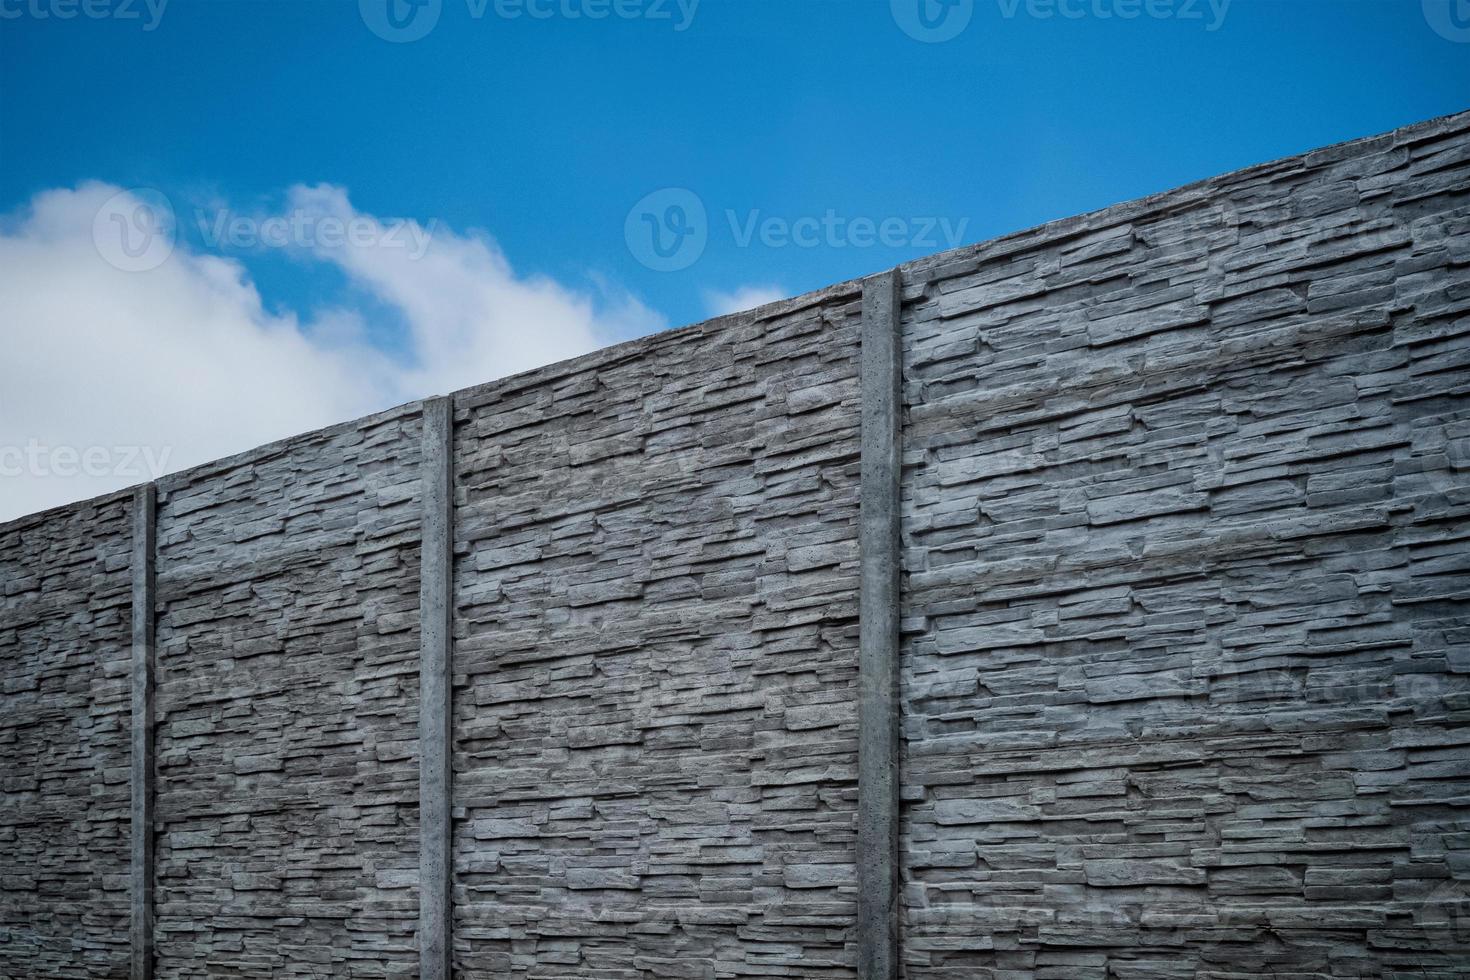 staket av pyreneiska stenpaneler. konstgjorda betongpaneler som imiterar natursten. foto